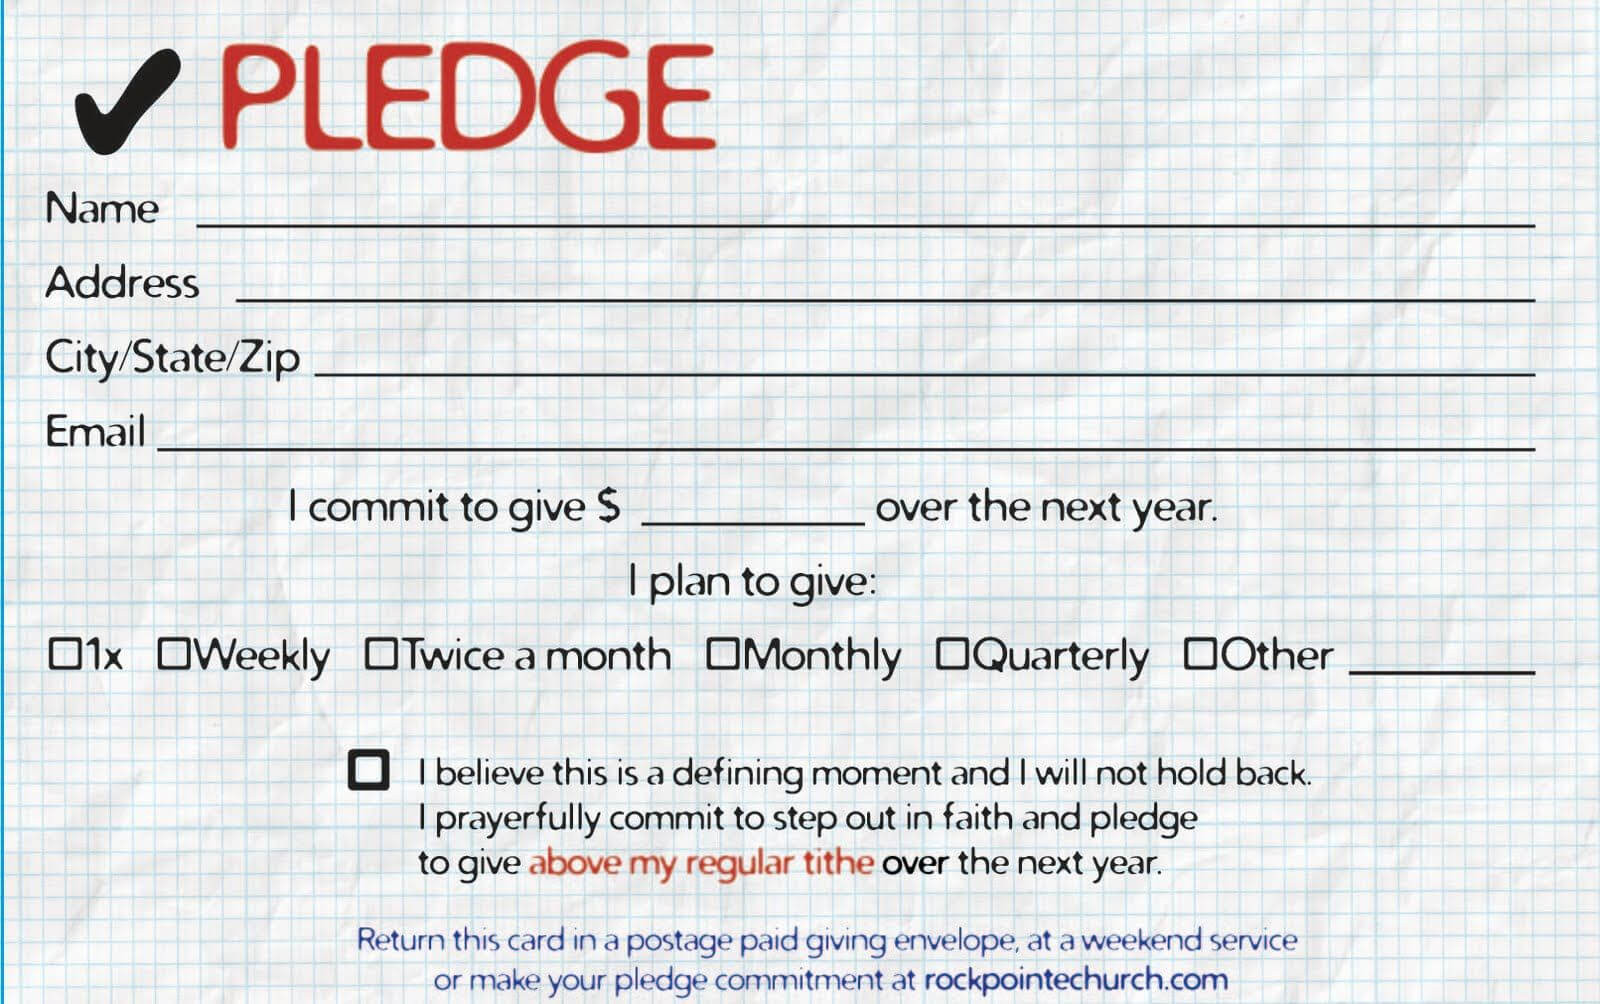 Pledge Cards For Churches | Pledge Card Templates | Card For Fundraising Pledge Card Template